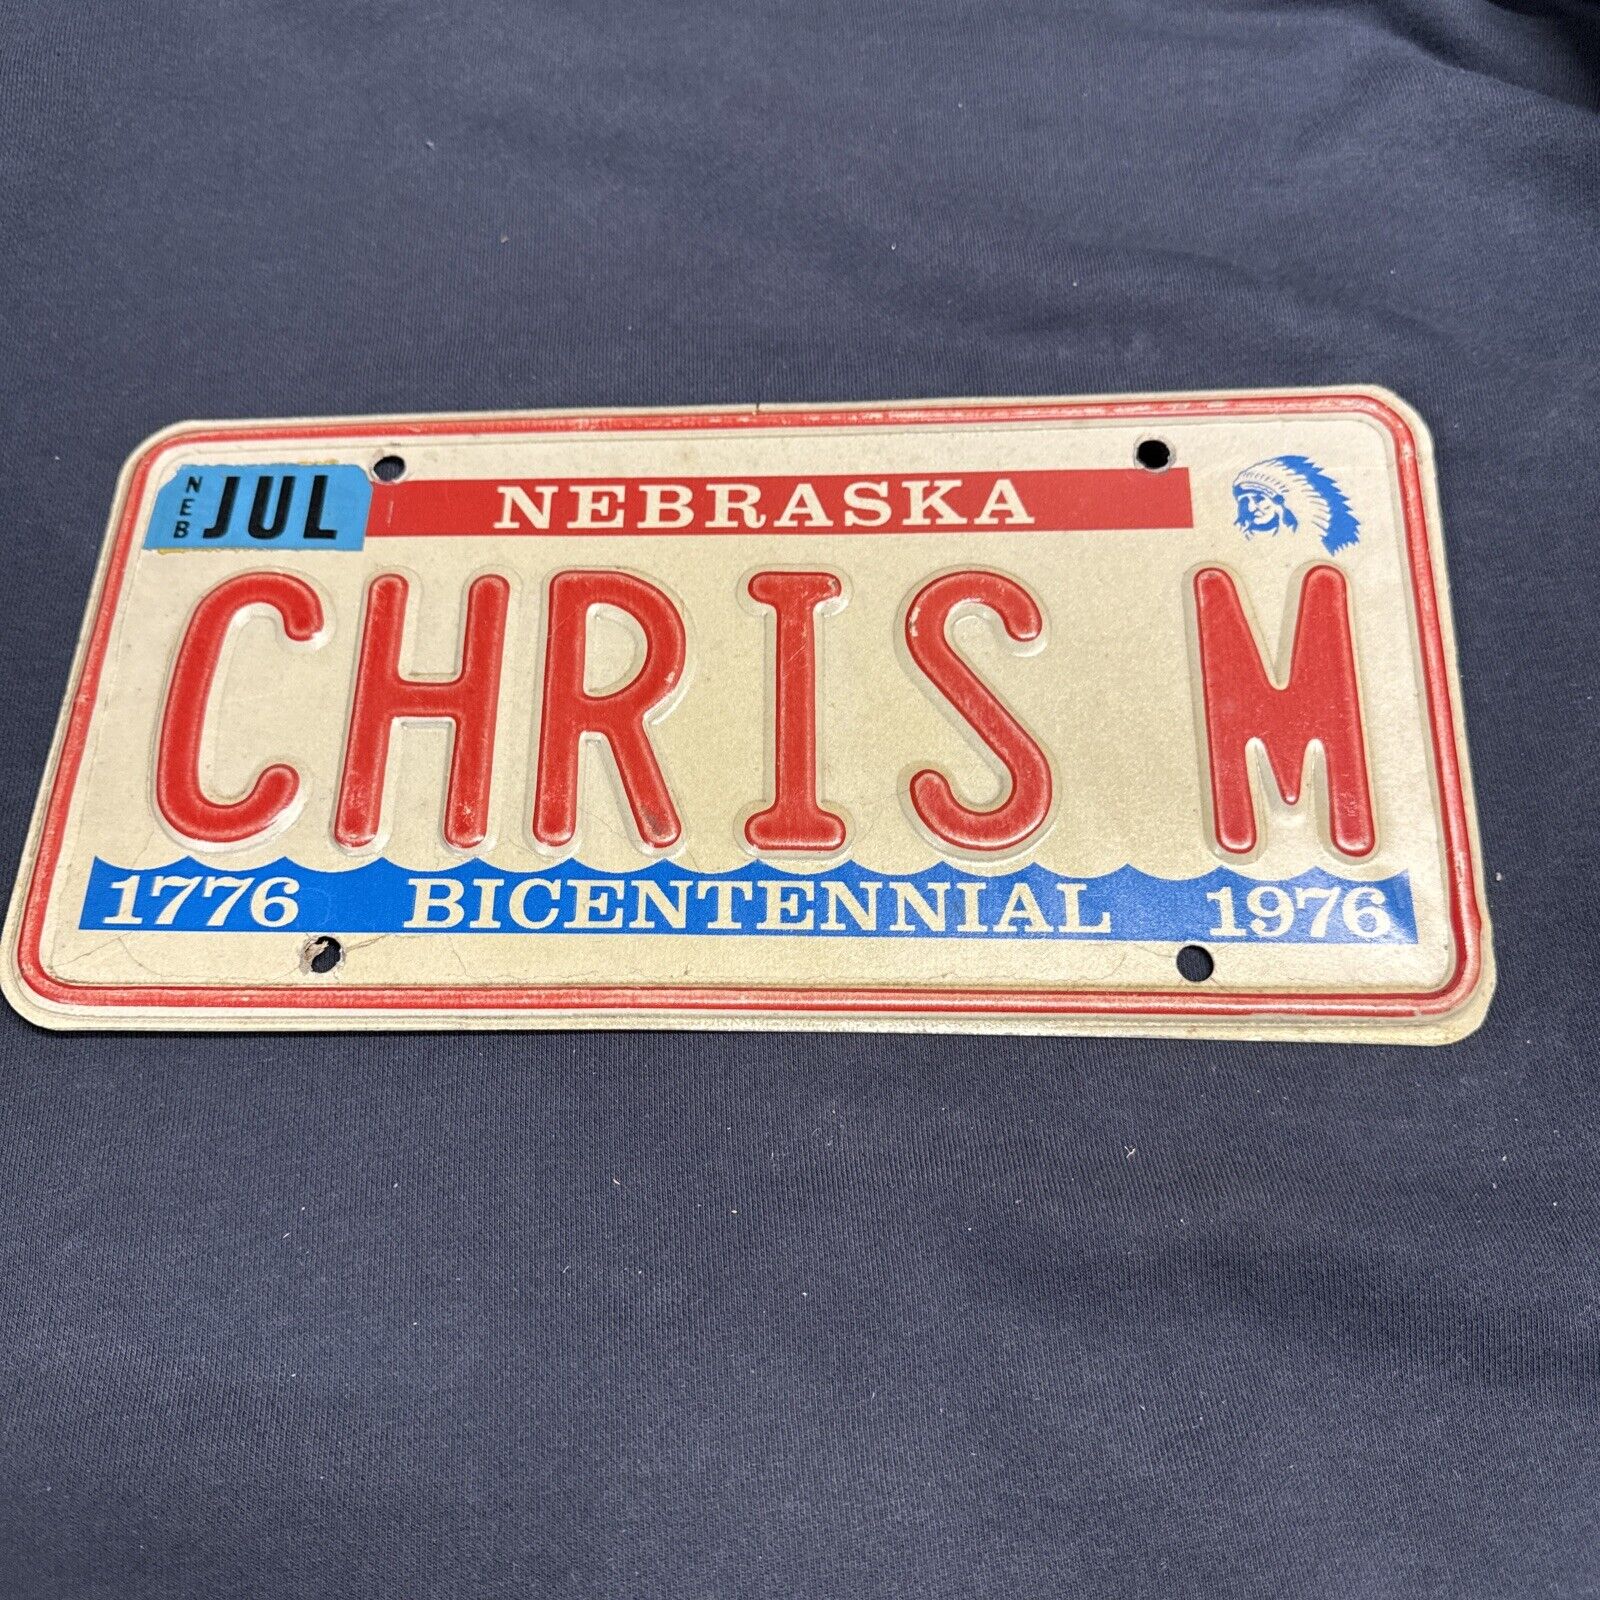 1976 Nebraska Bicentennial Vanity License Plate CHRIS M